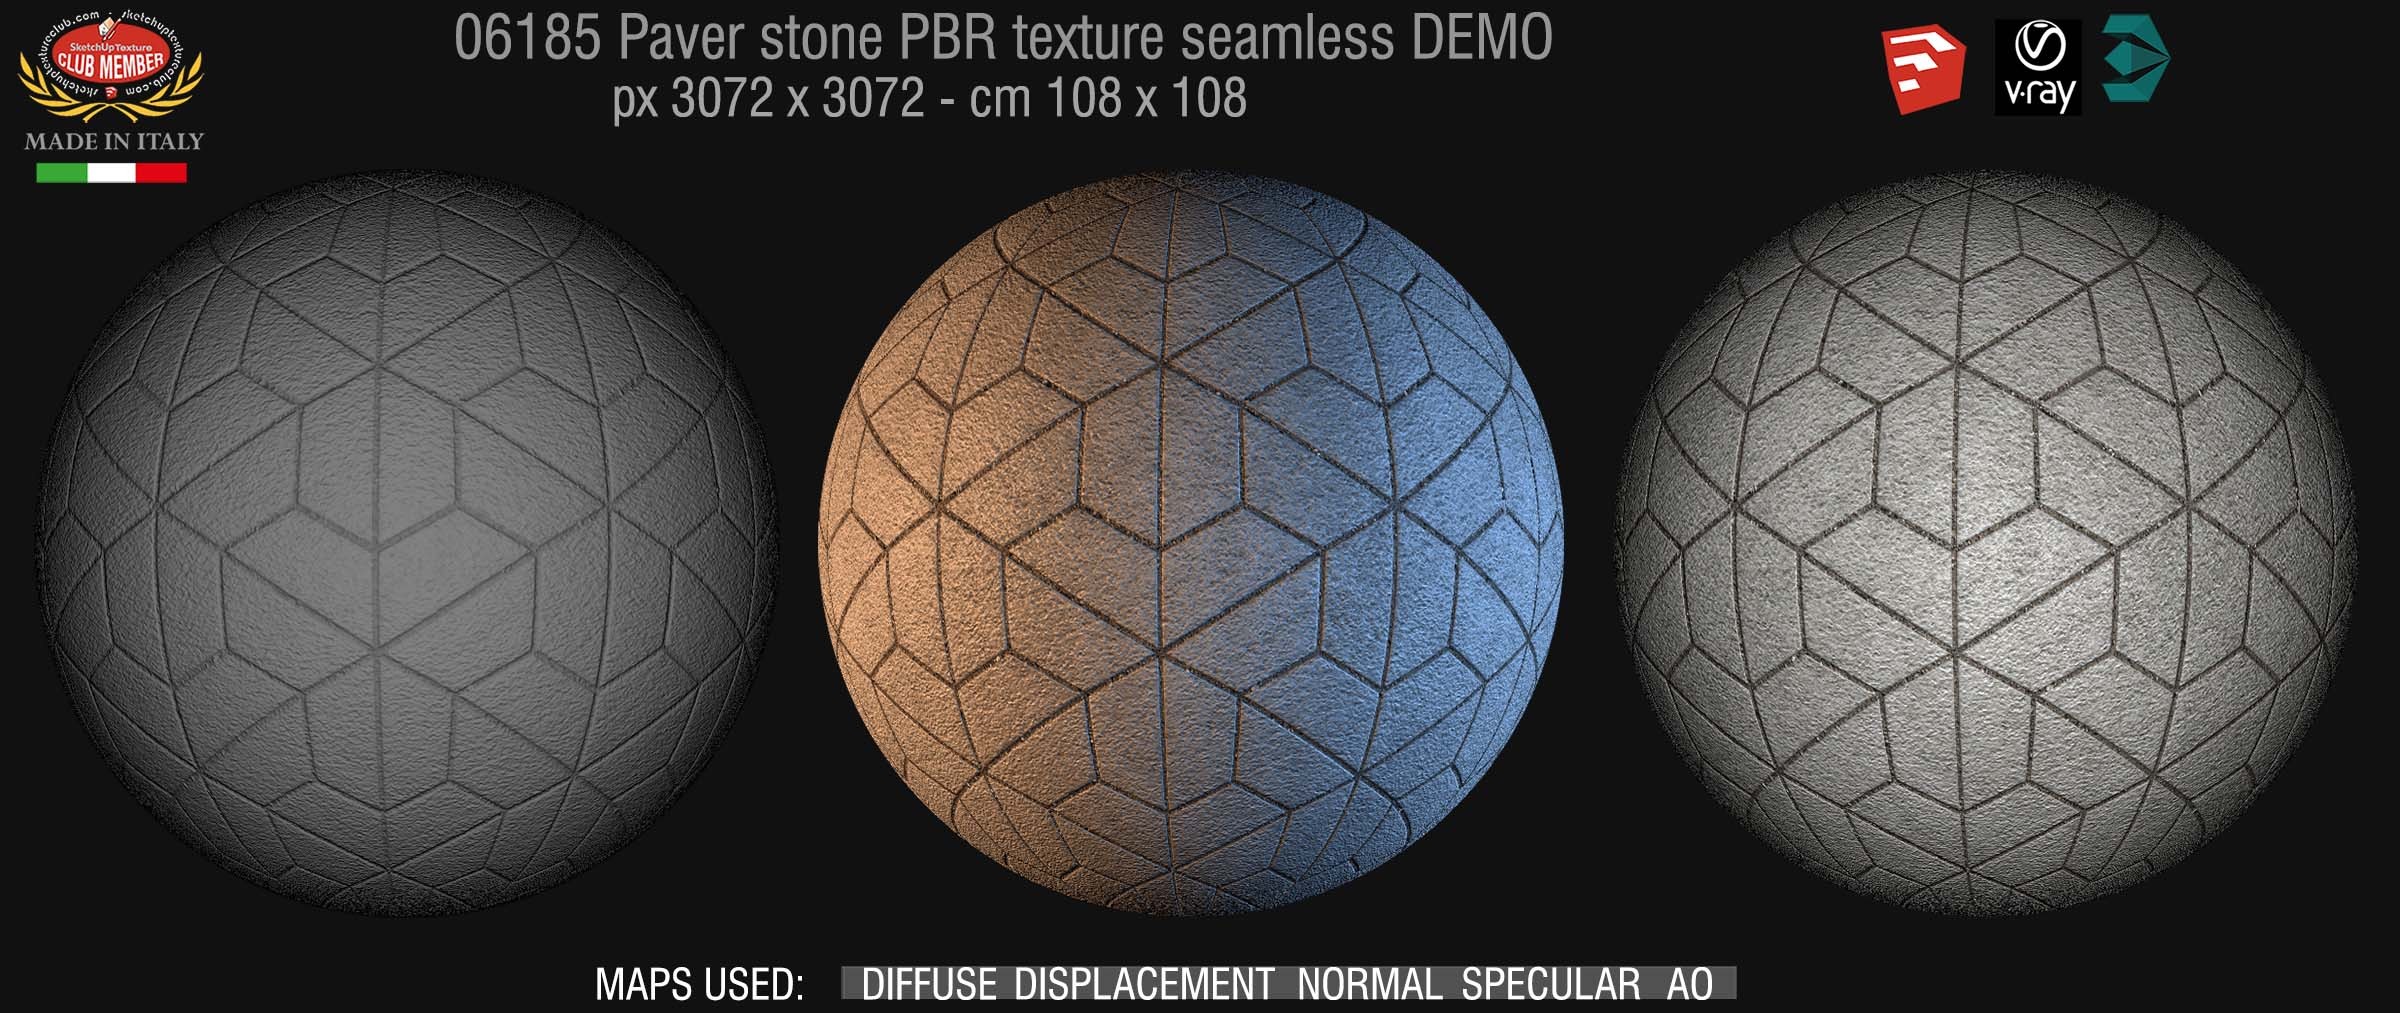 06185 Pavers stone PBR texture seamless DEMO